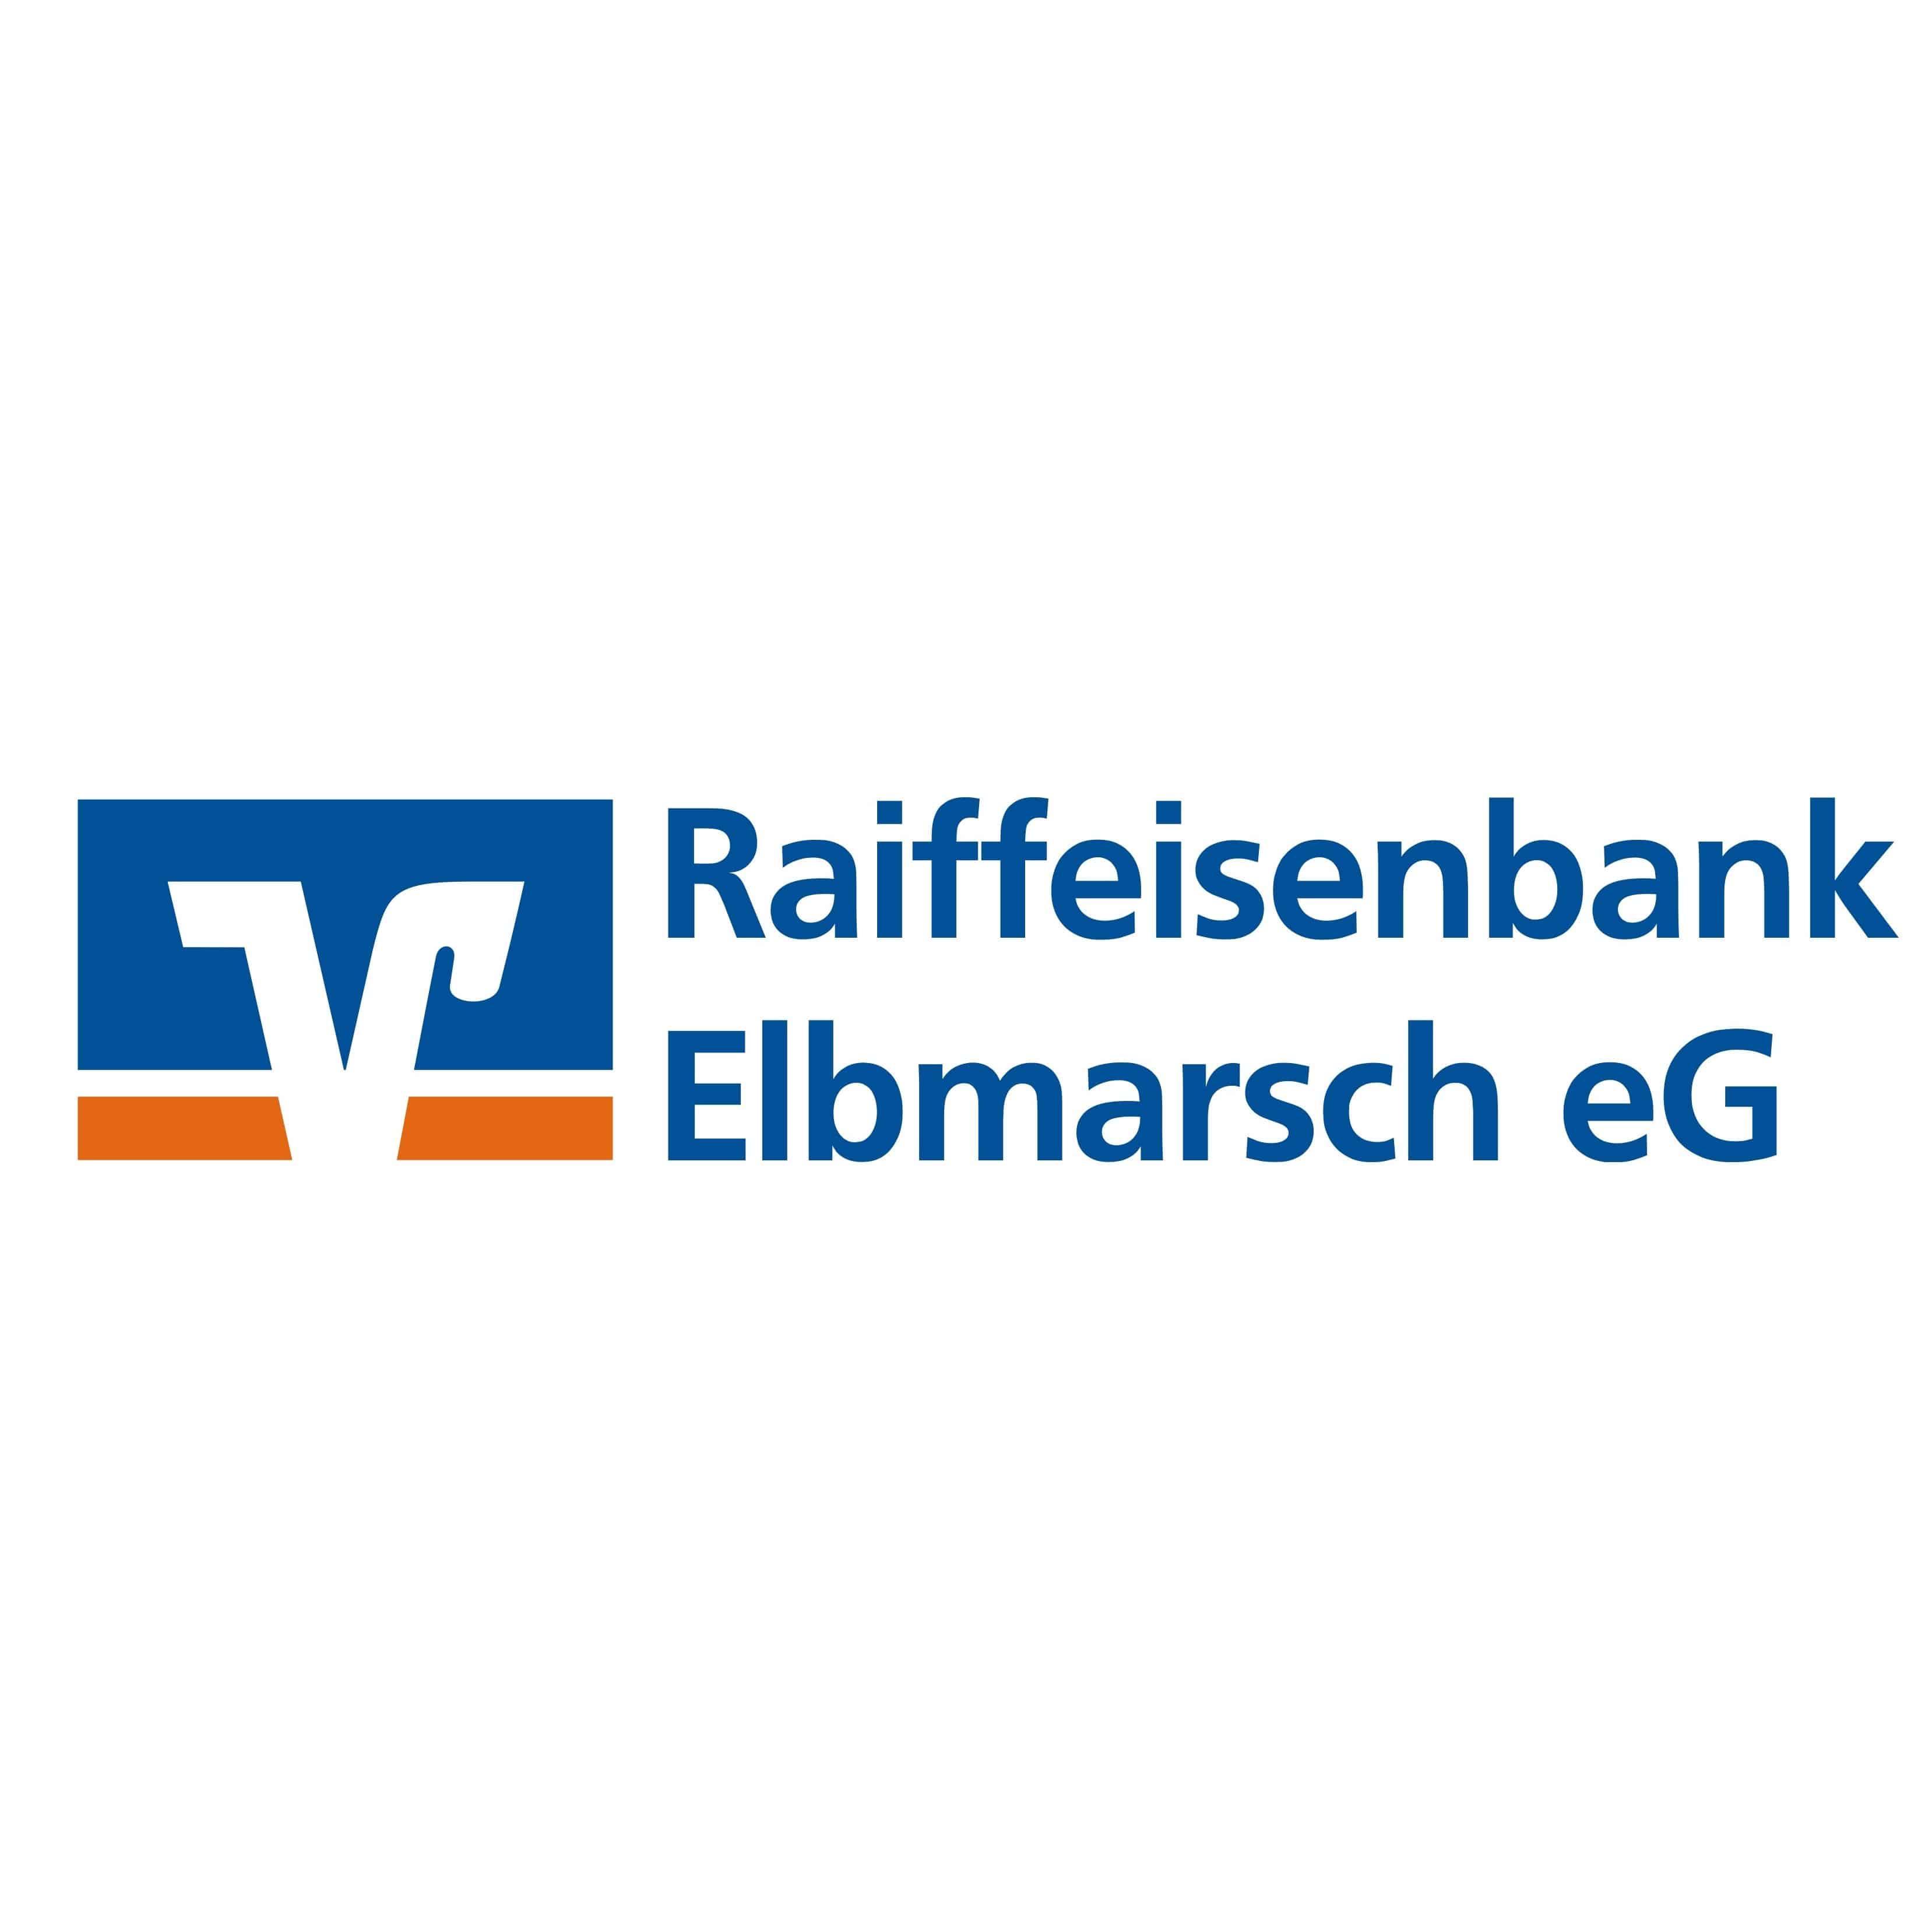 Raiffeisenbank Elbmarsch eG